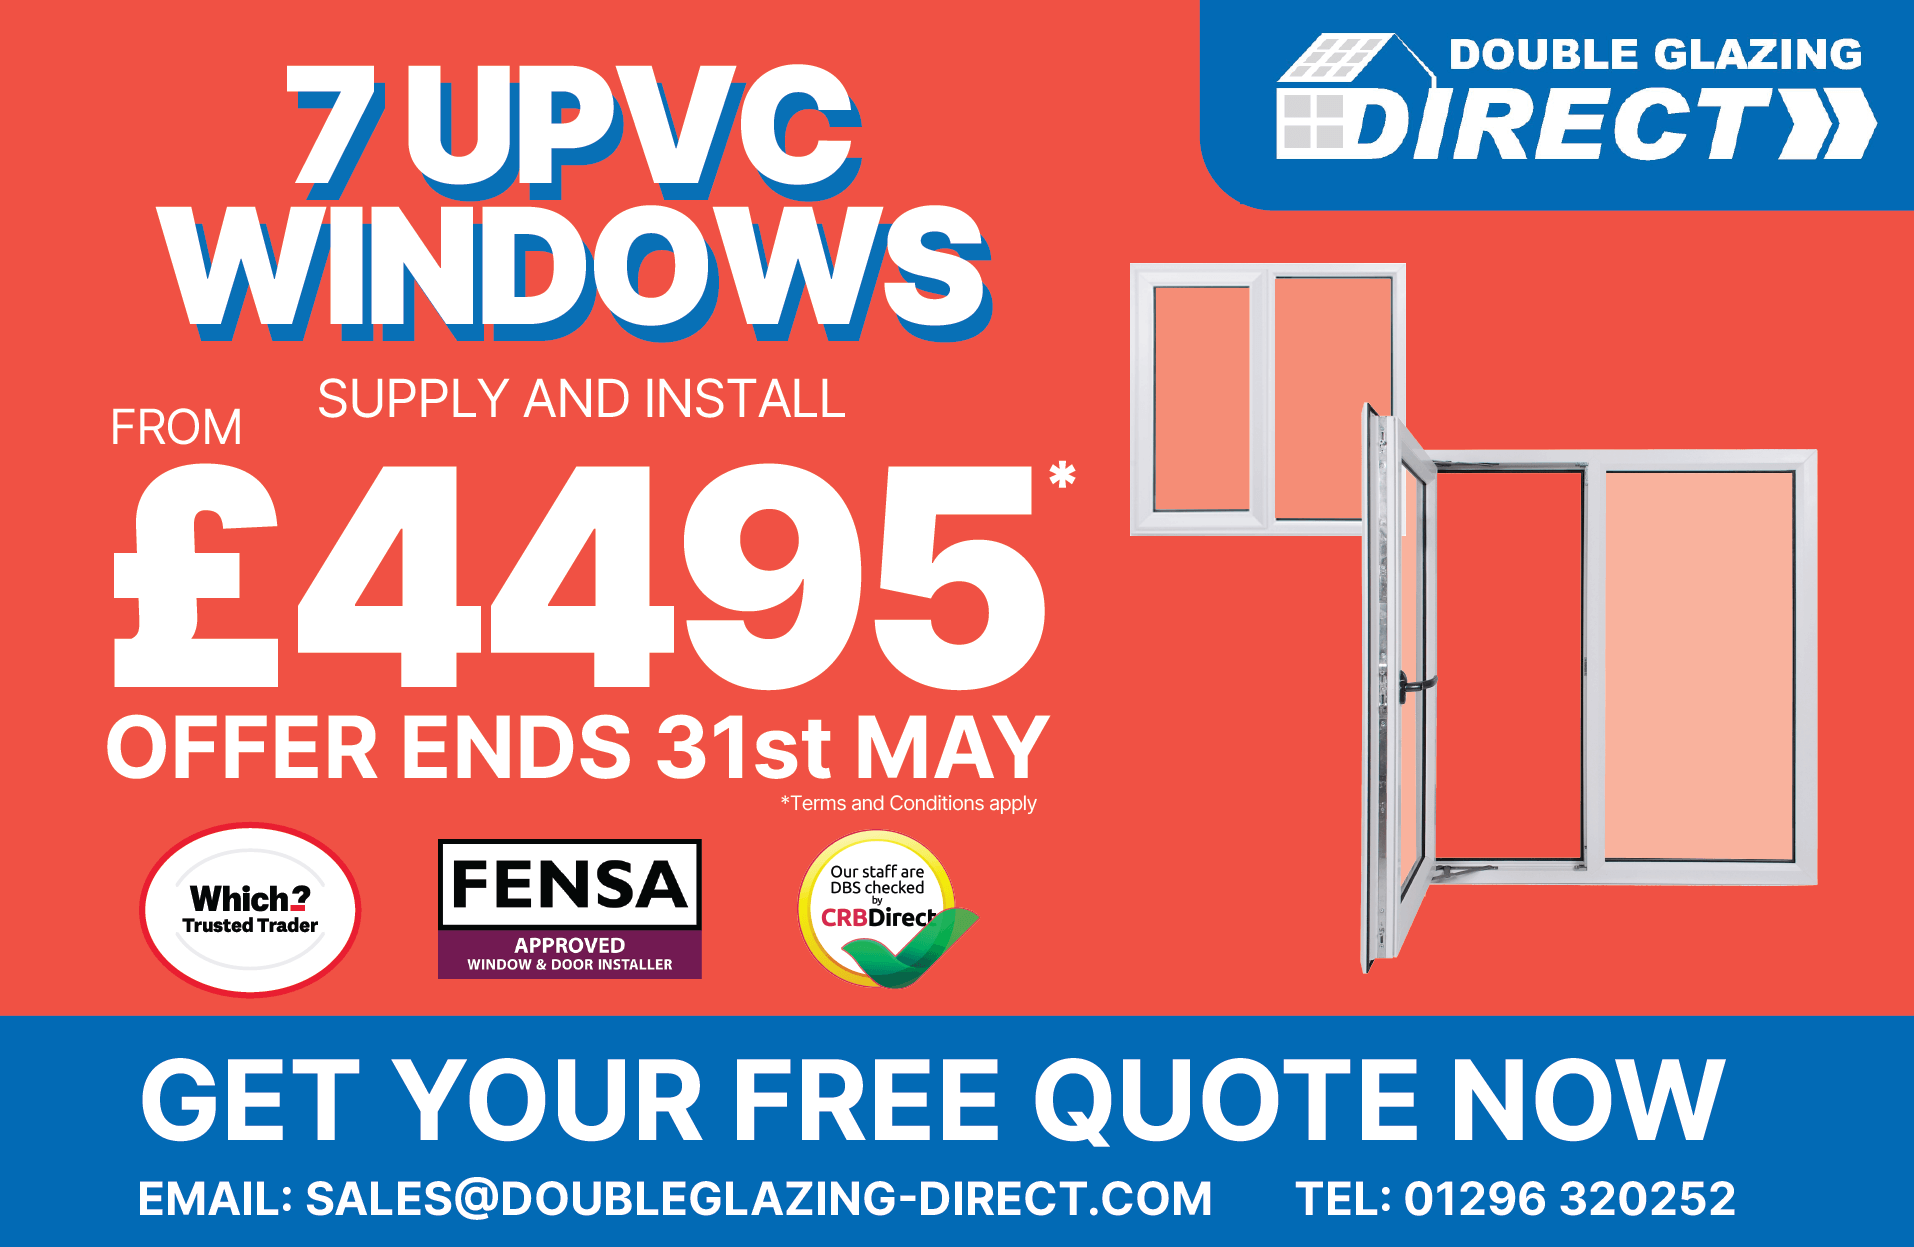 UPVC windows offer